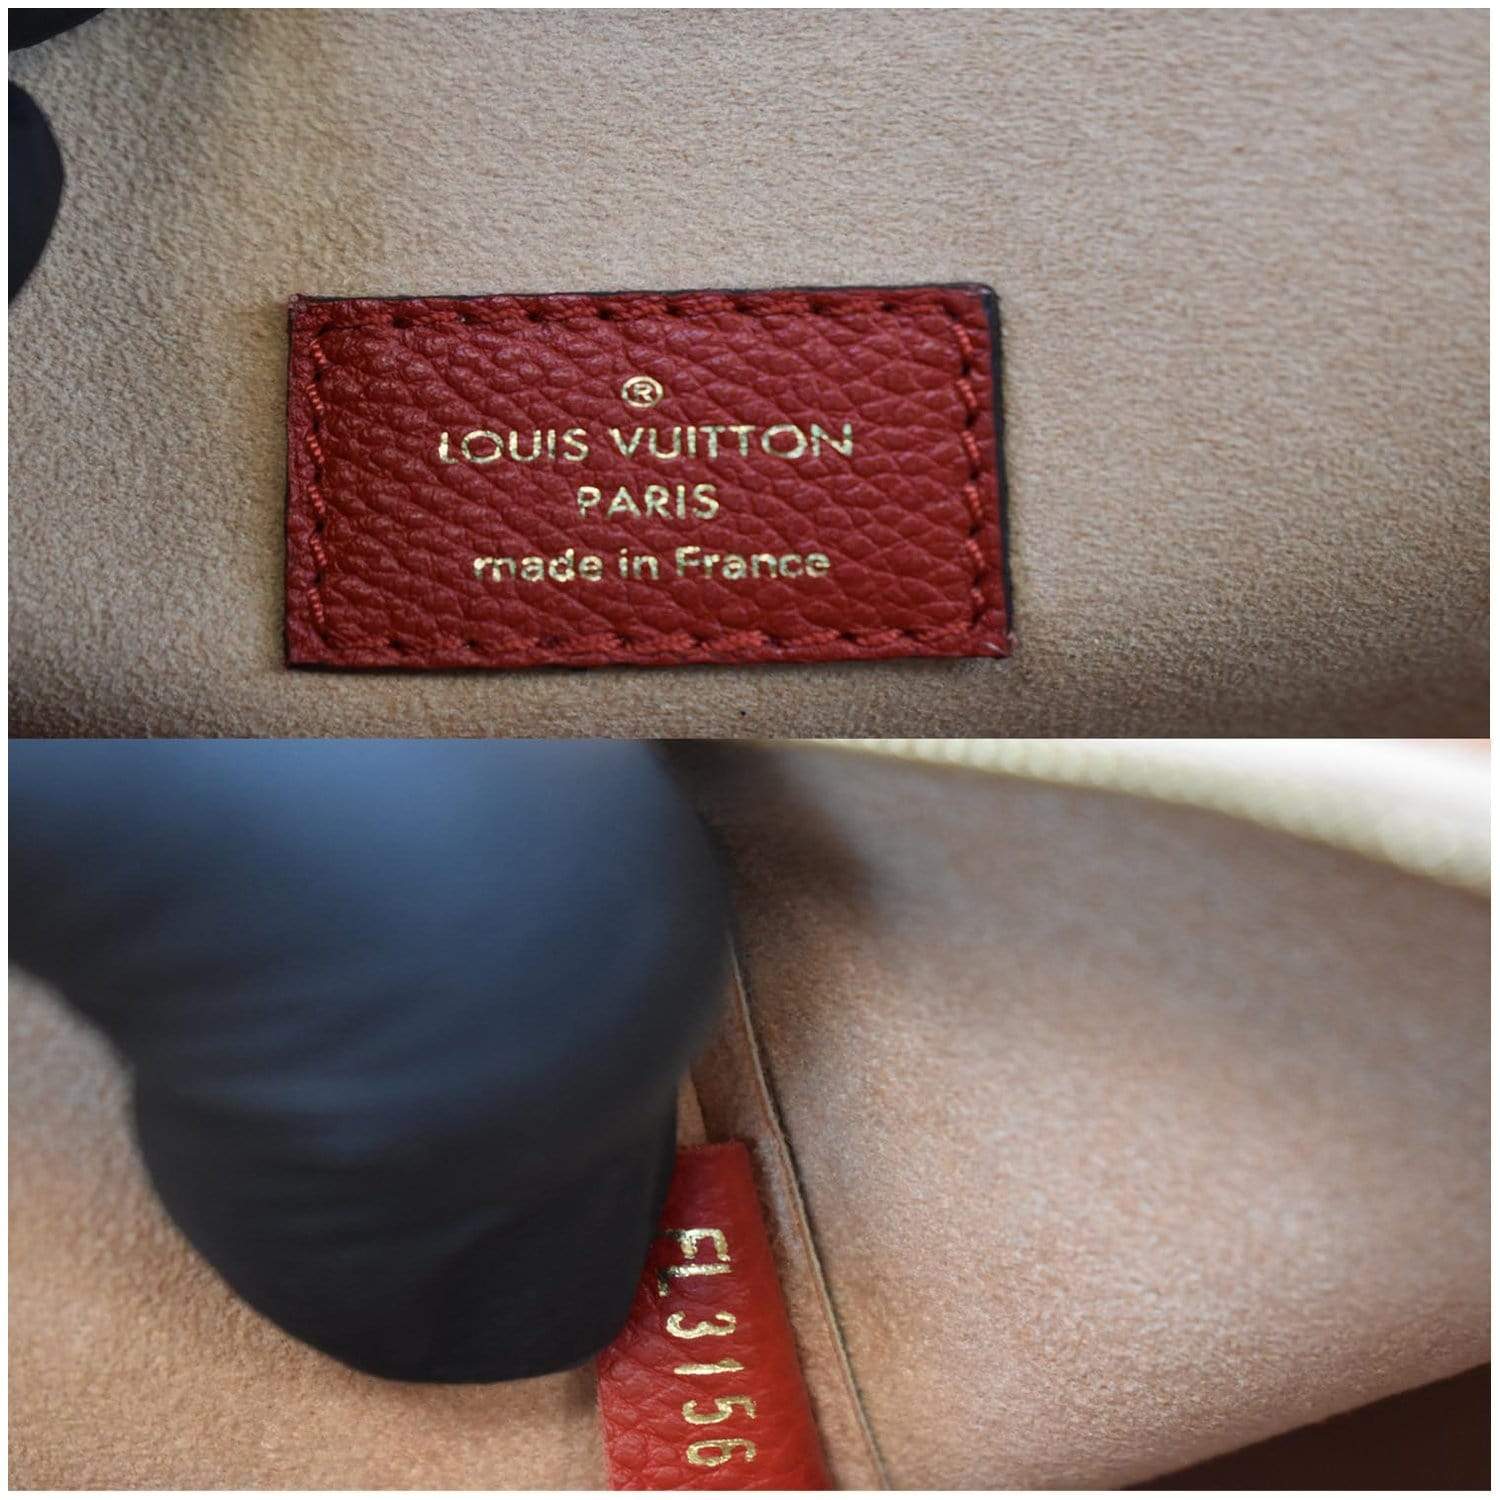 Louis Vuitton Monogram Flandrin two way bag red handles and trim COA